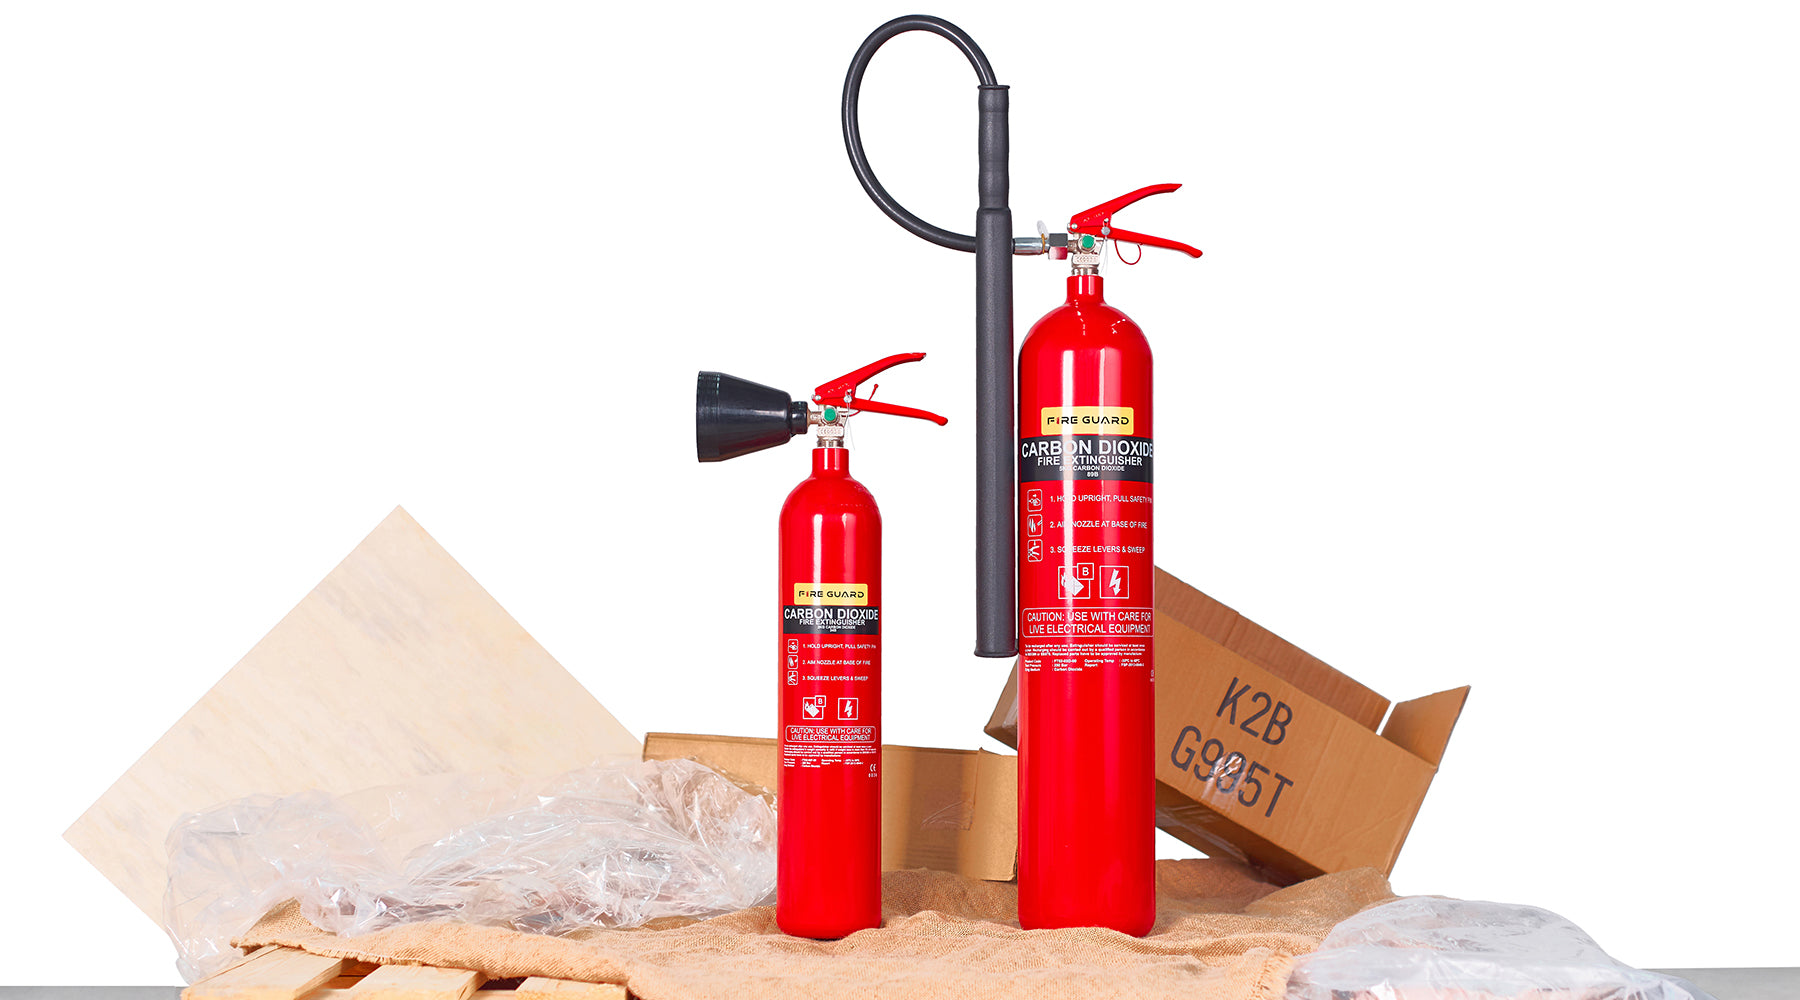 carbon dioxide fire extinguishers